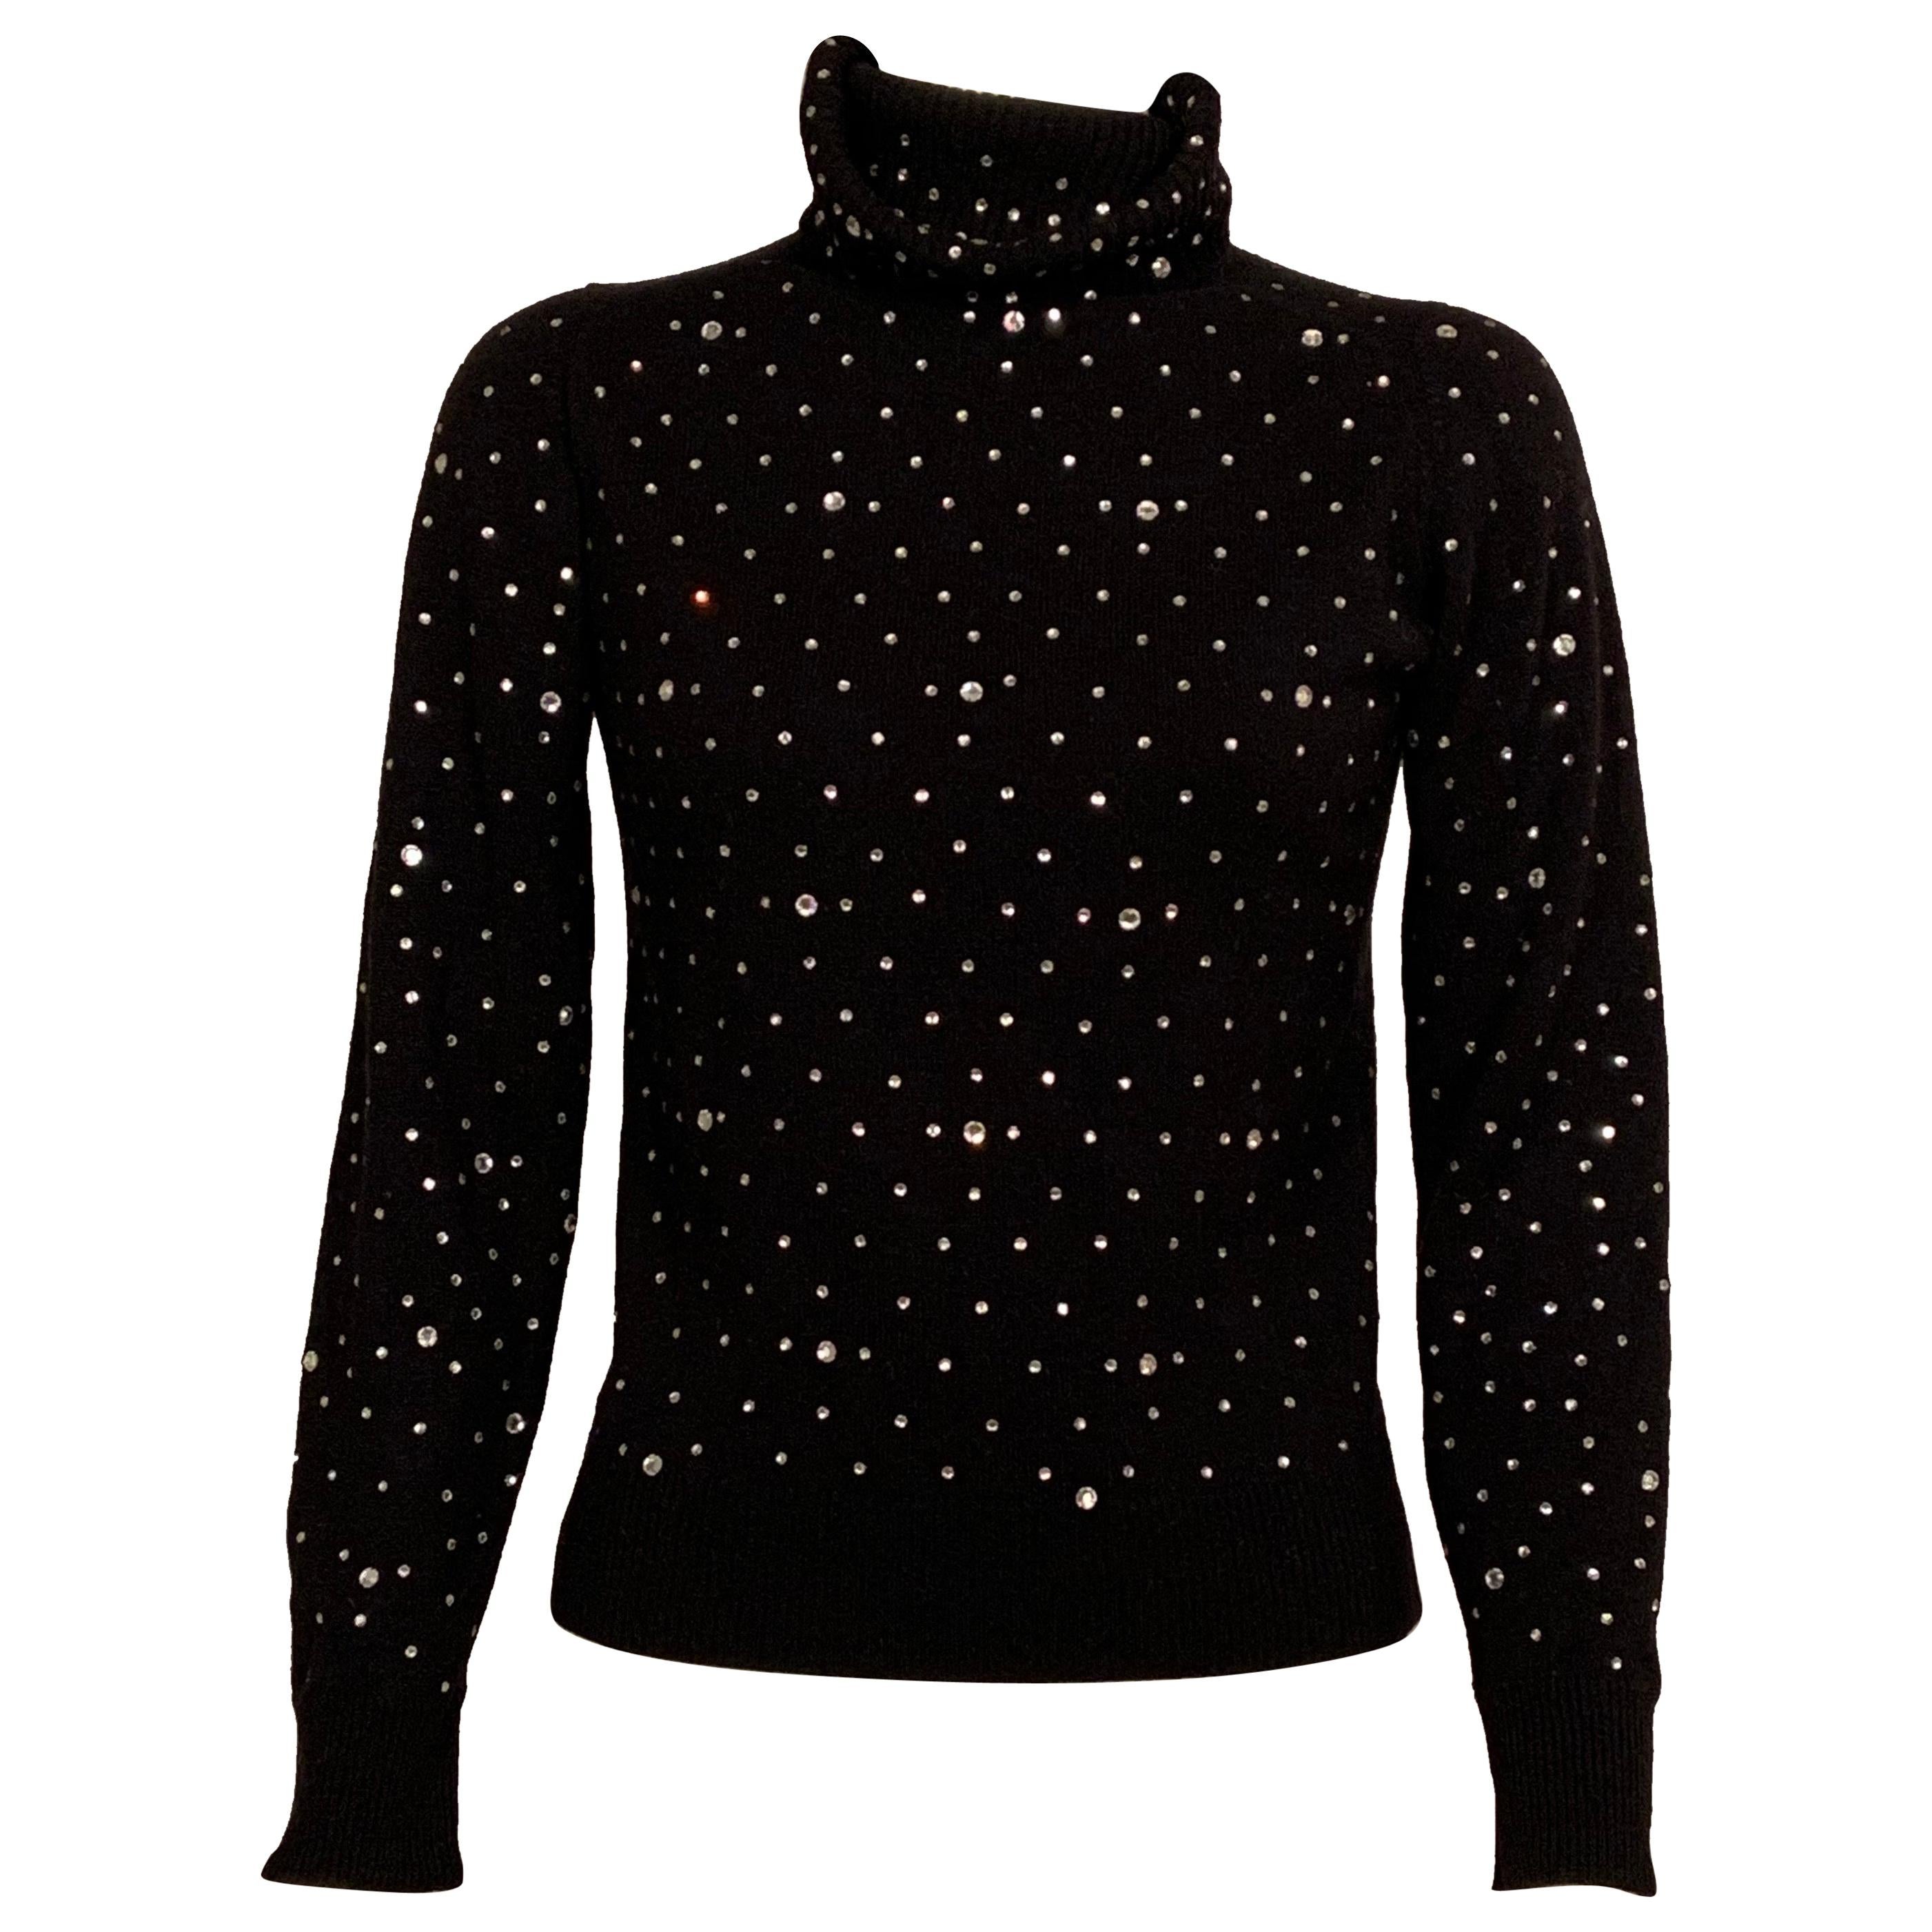 Vintage Black Cashmere Turtleneck Sweater Sparkling with Rhinestone Decoration